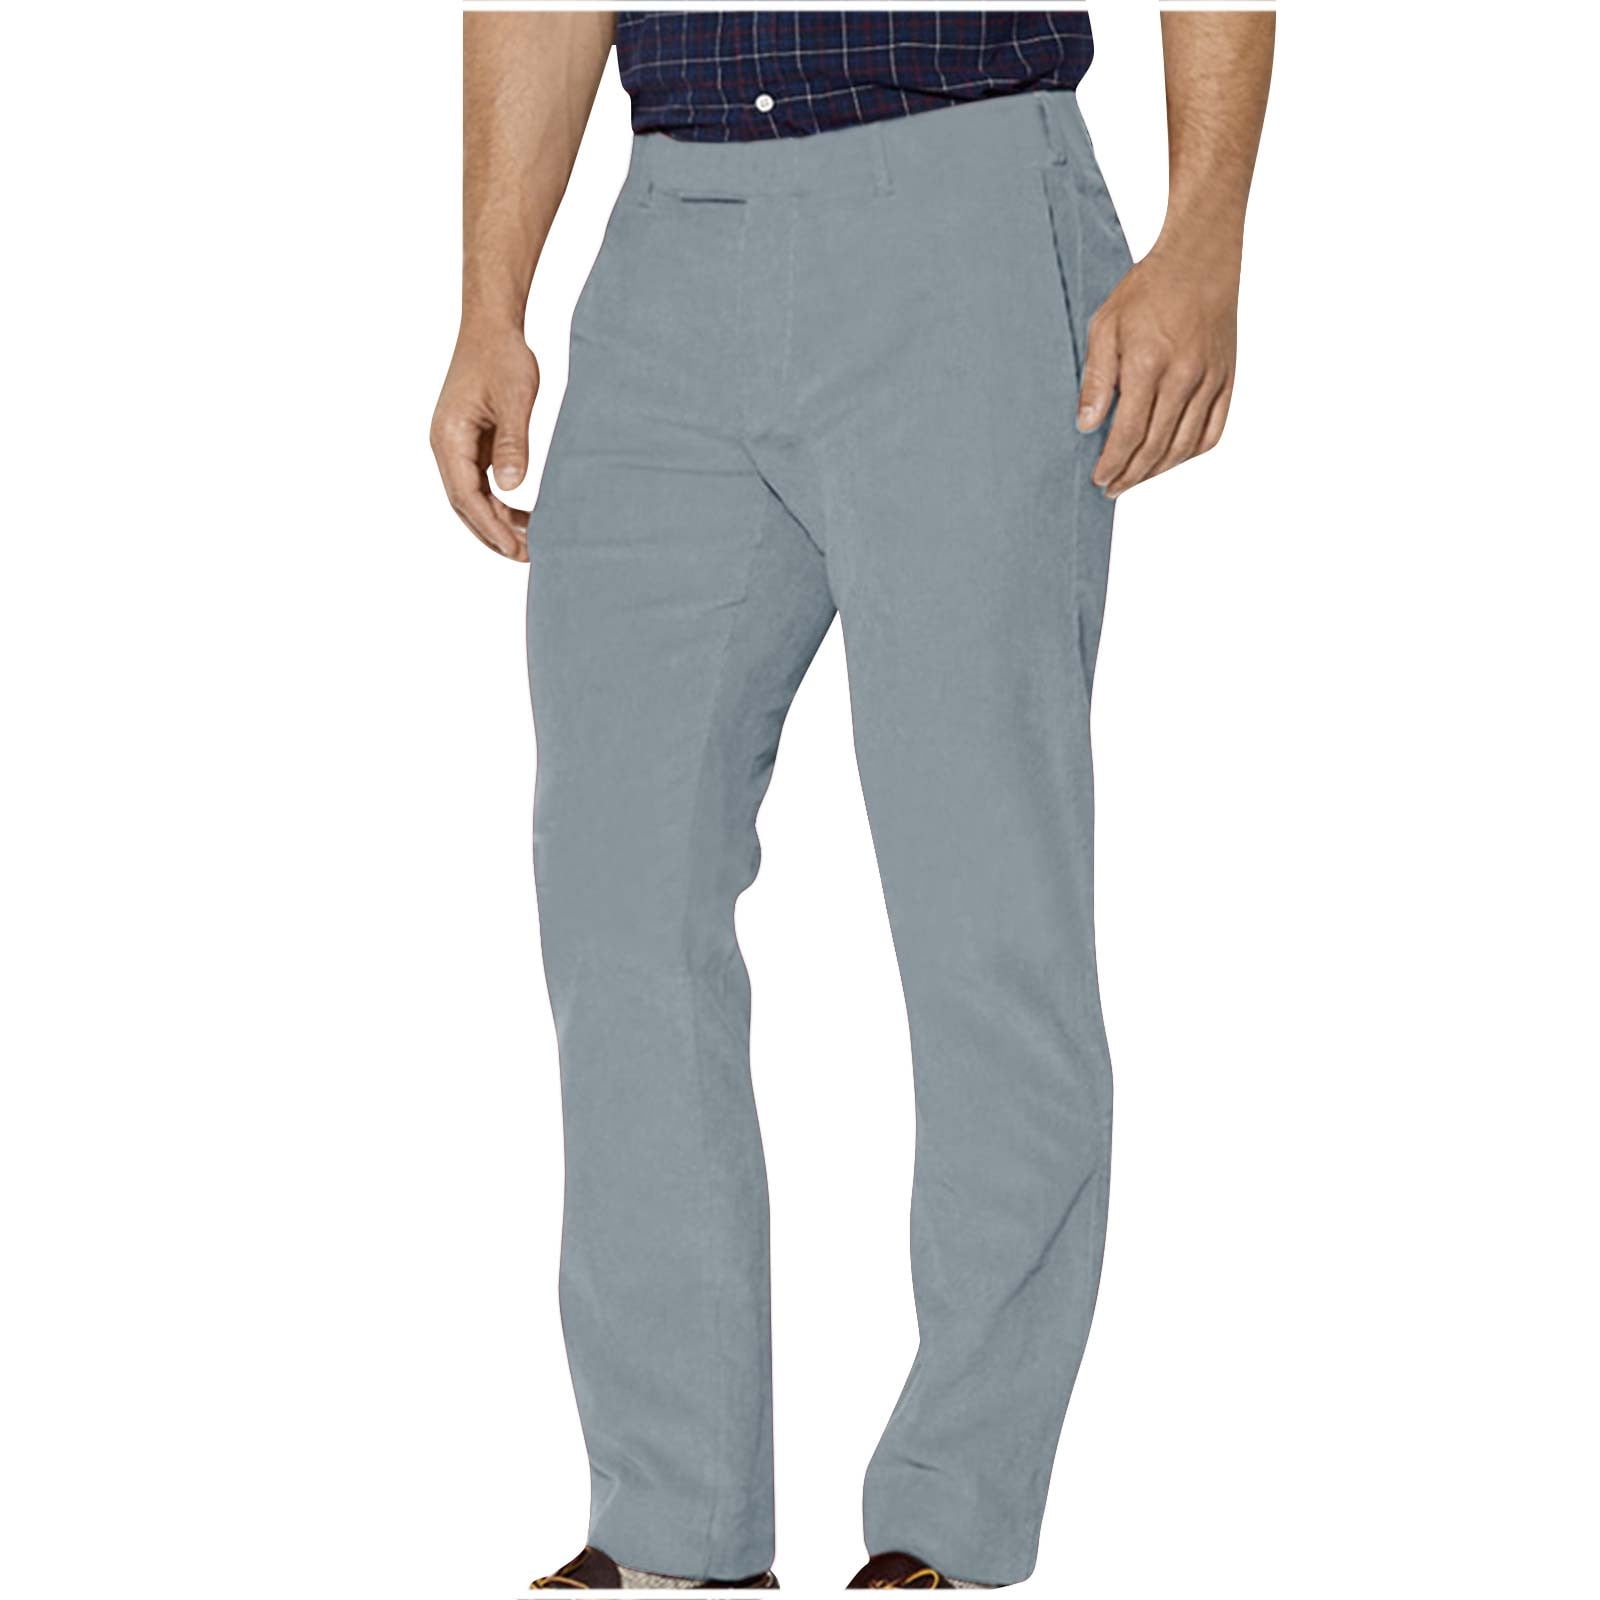 Lilgiuy Men's Golf Pants Stretch Slim Fit Slacks Work Dress Pants ...